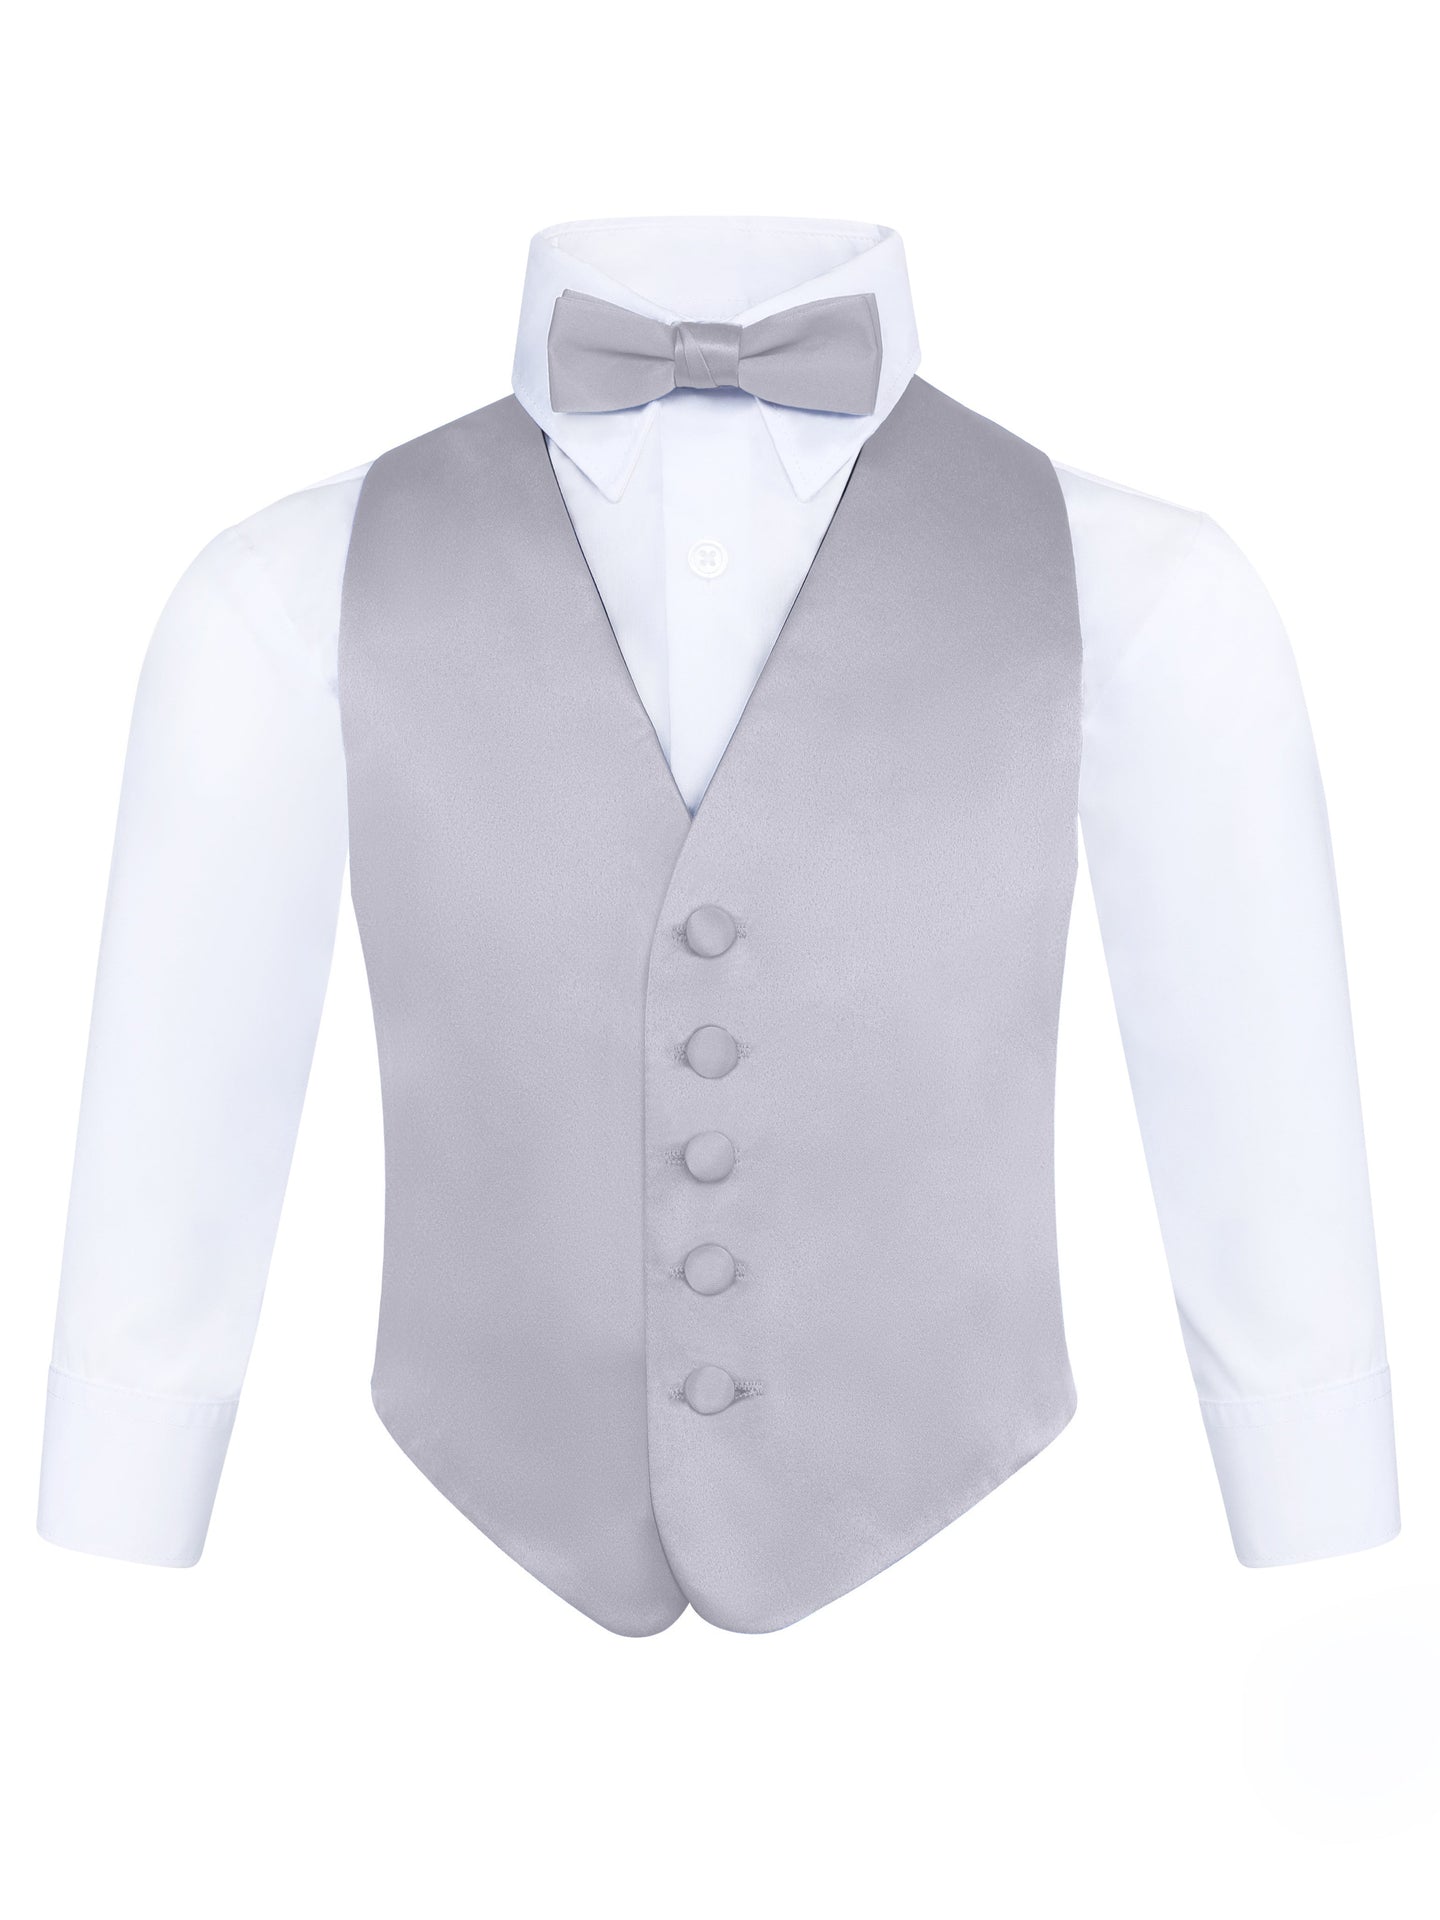 S.H. Churchill & Co. Boy's 3 Piece Silver Backless Formal Vest Set - Includes Vest, Bow Tie, Pocket Square for Tuxedo or Suit